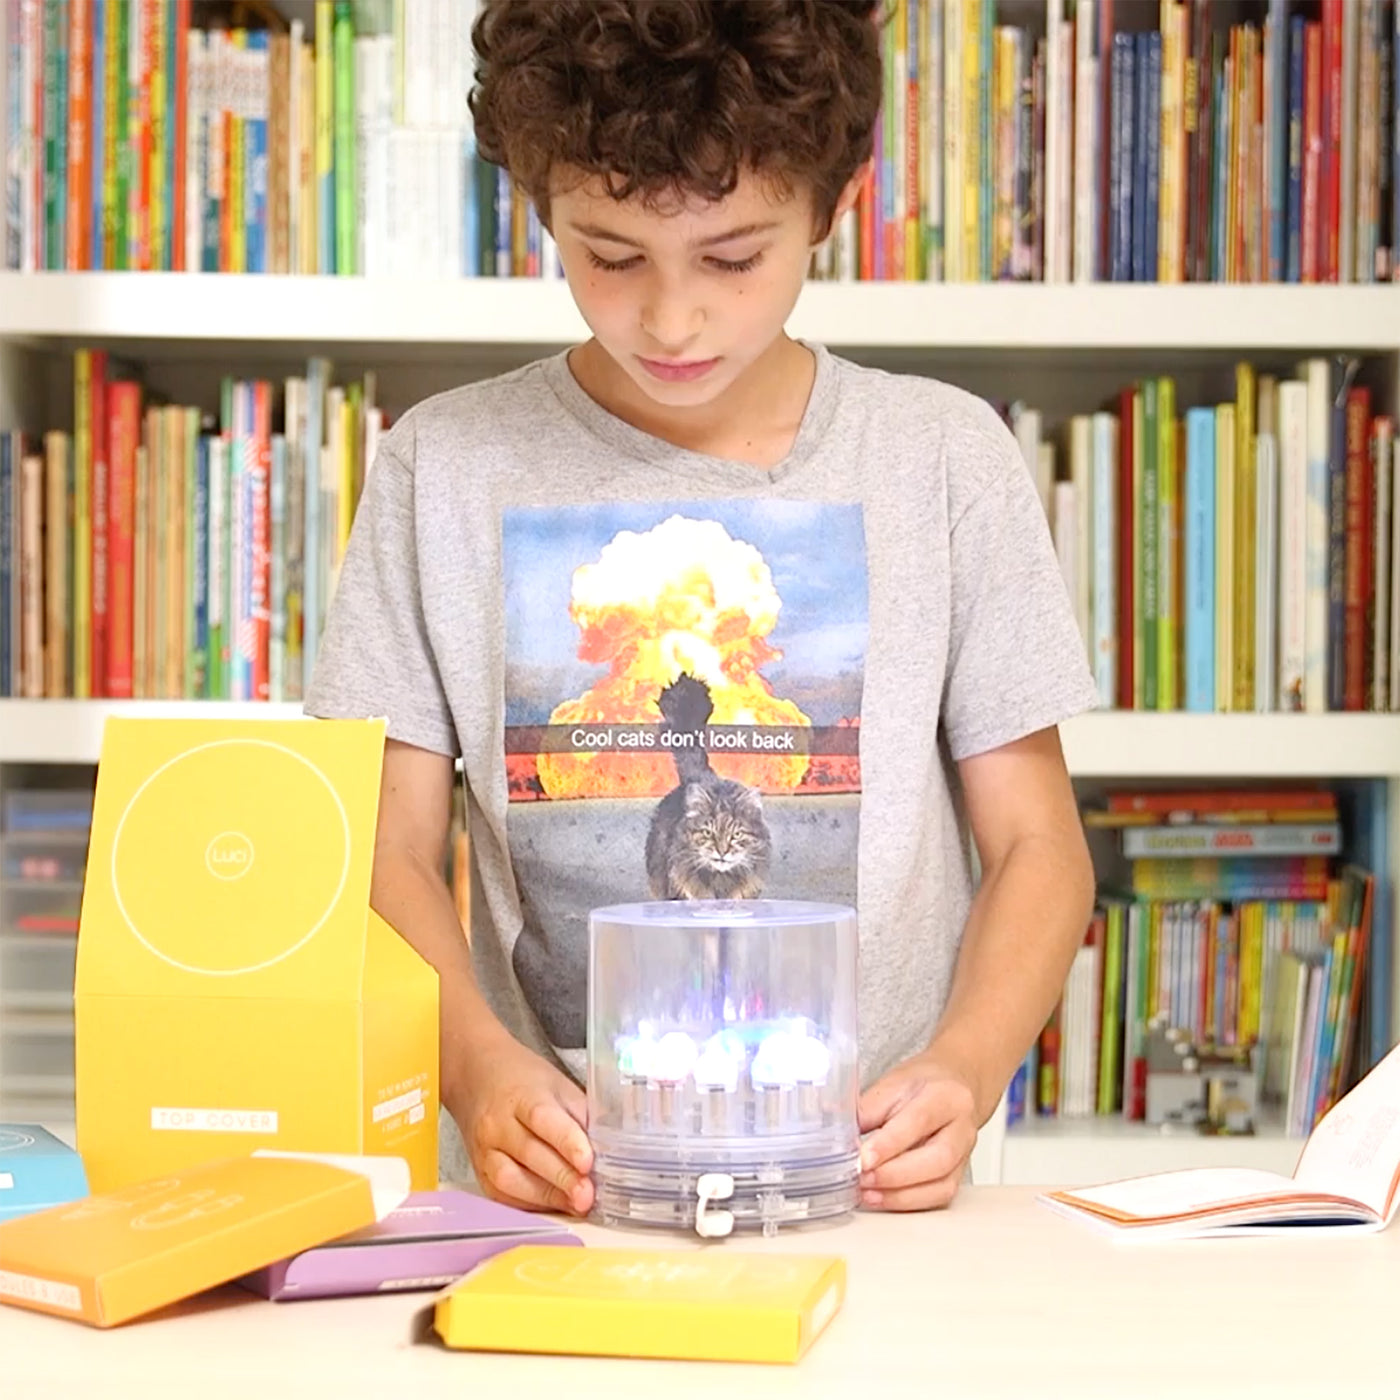 Build-Your-Own Luci: Solar Light Kit